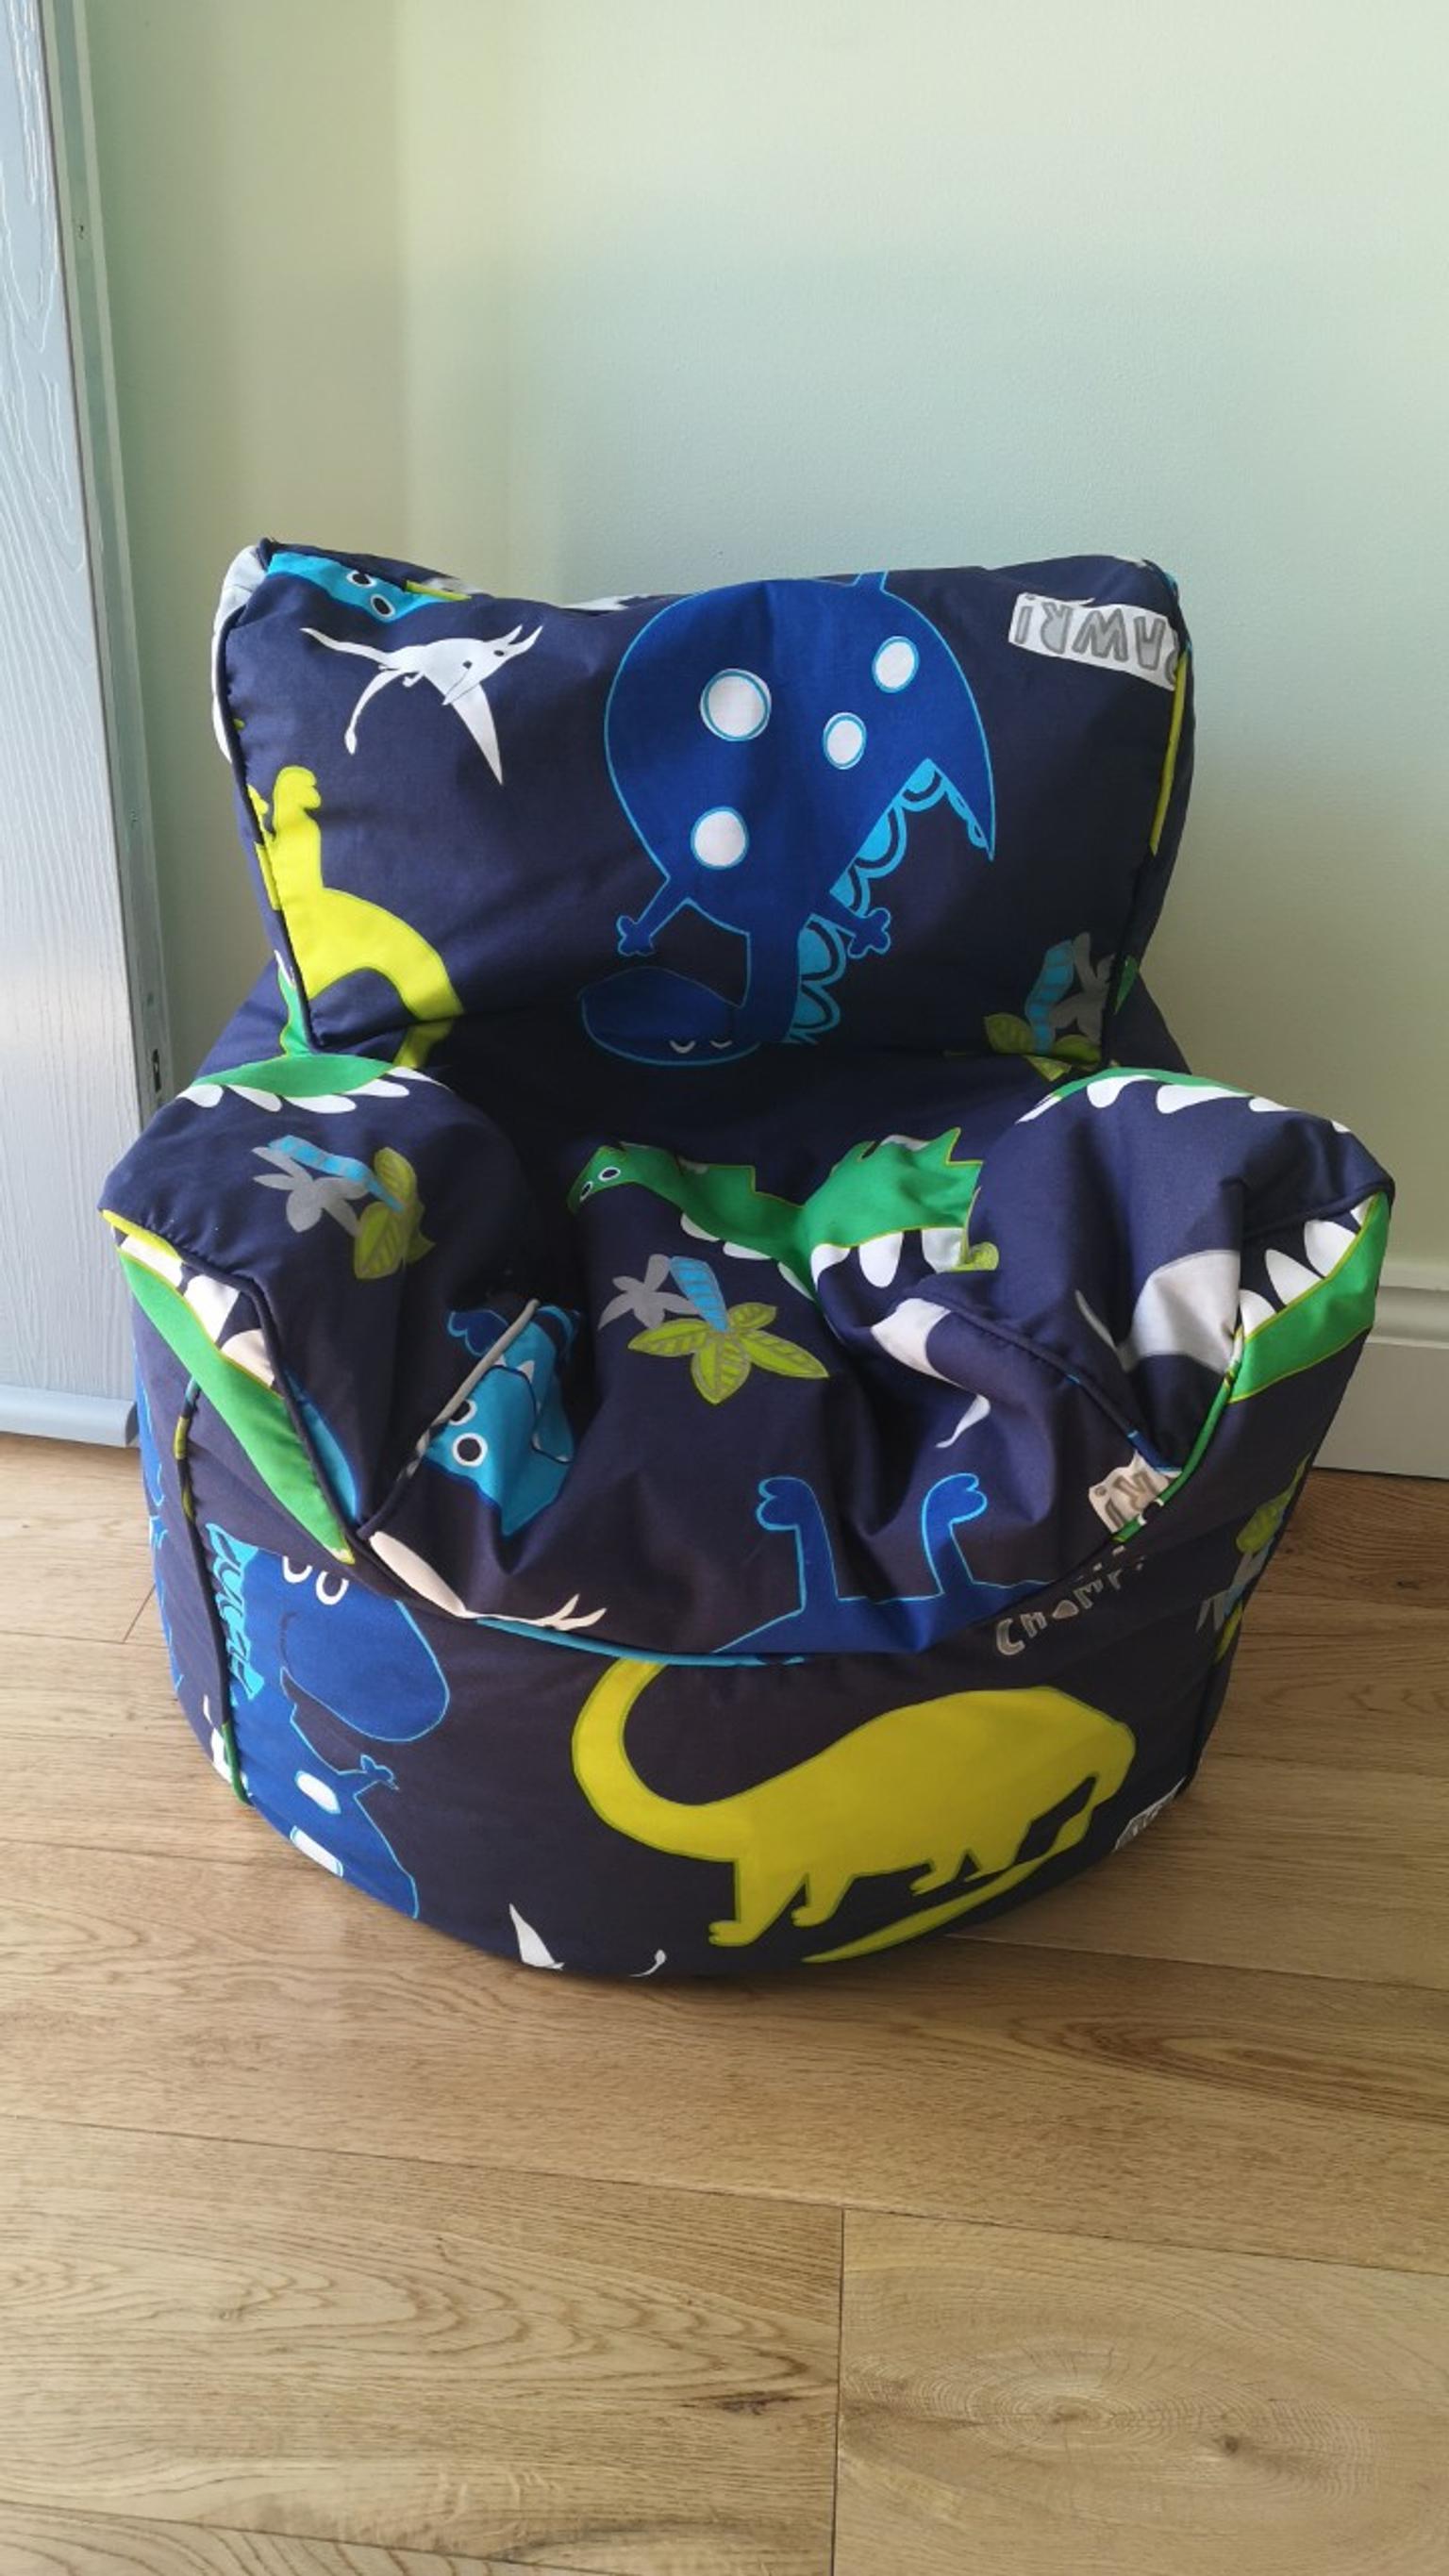 Child S New Dinosaur Bean Bag Chair In Tw2 Thames For 13 00 For